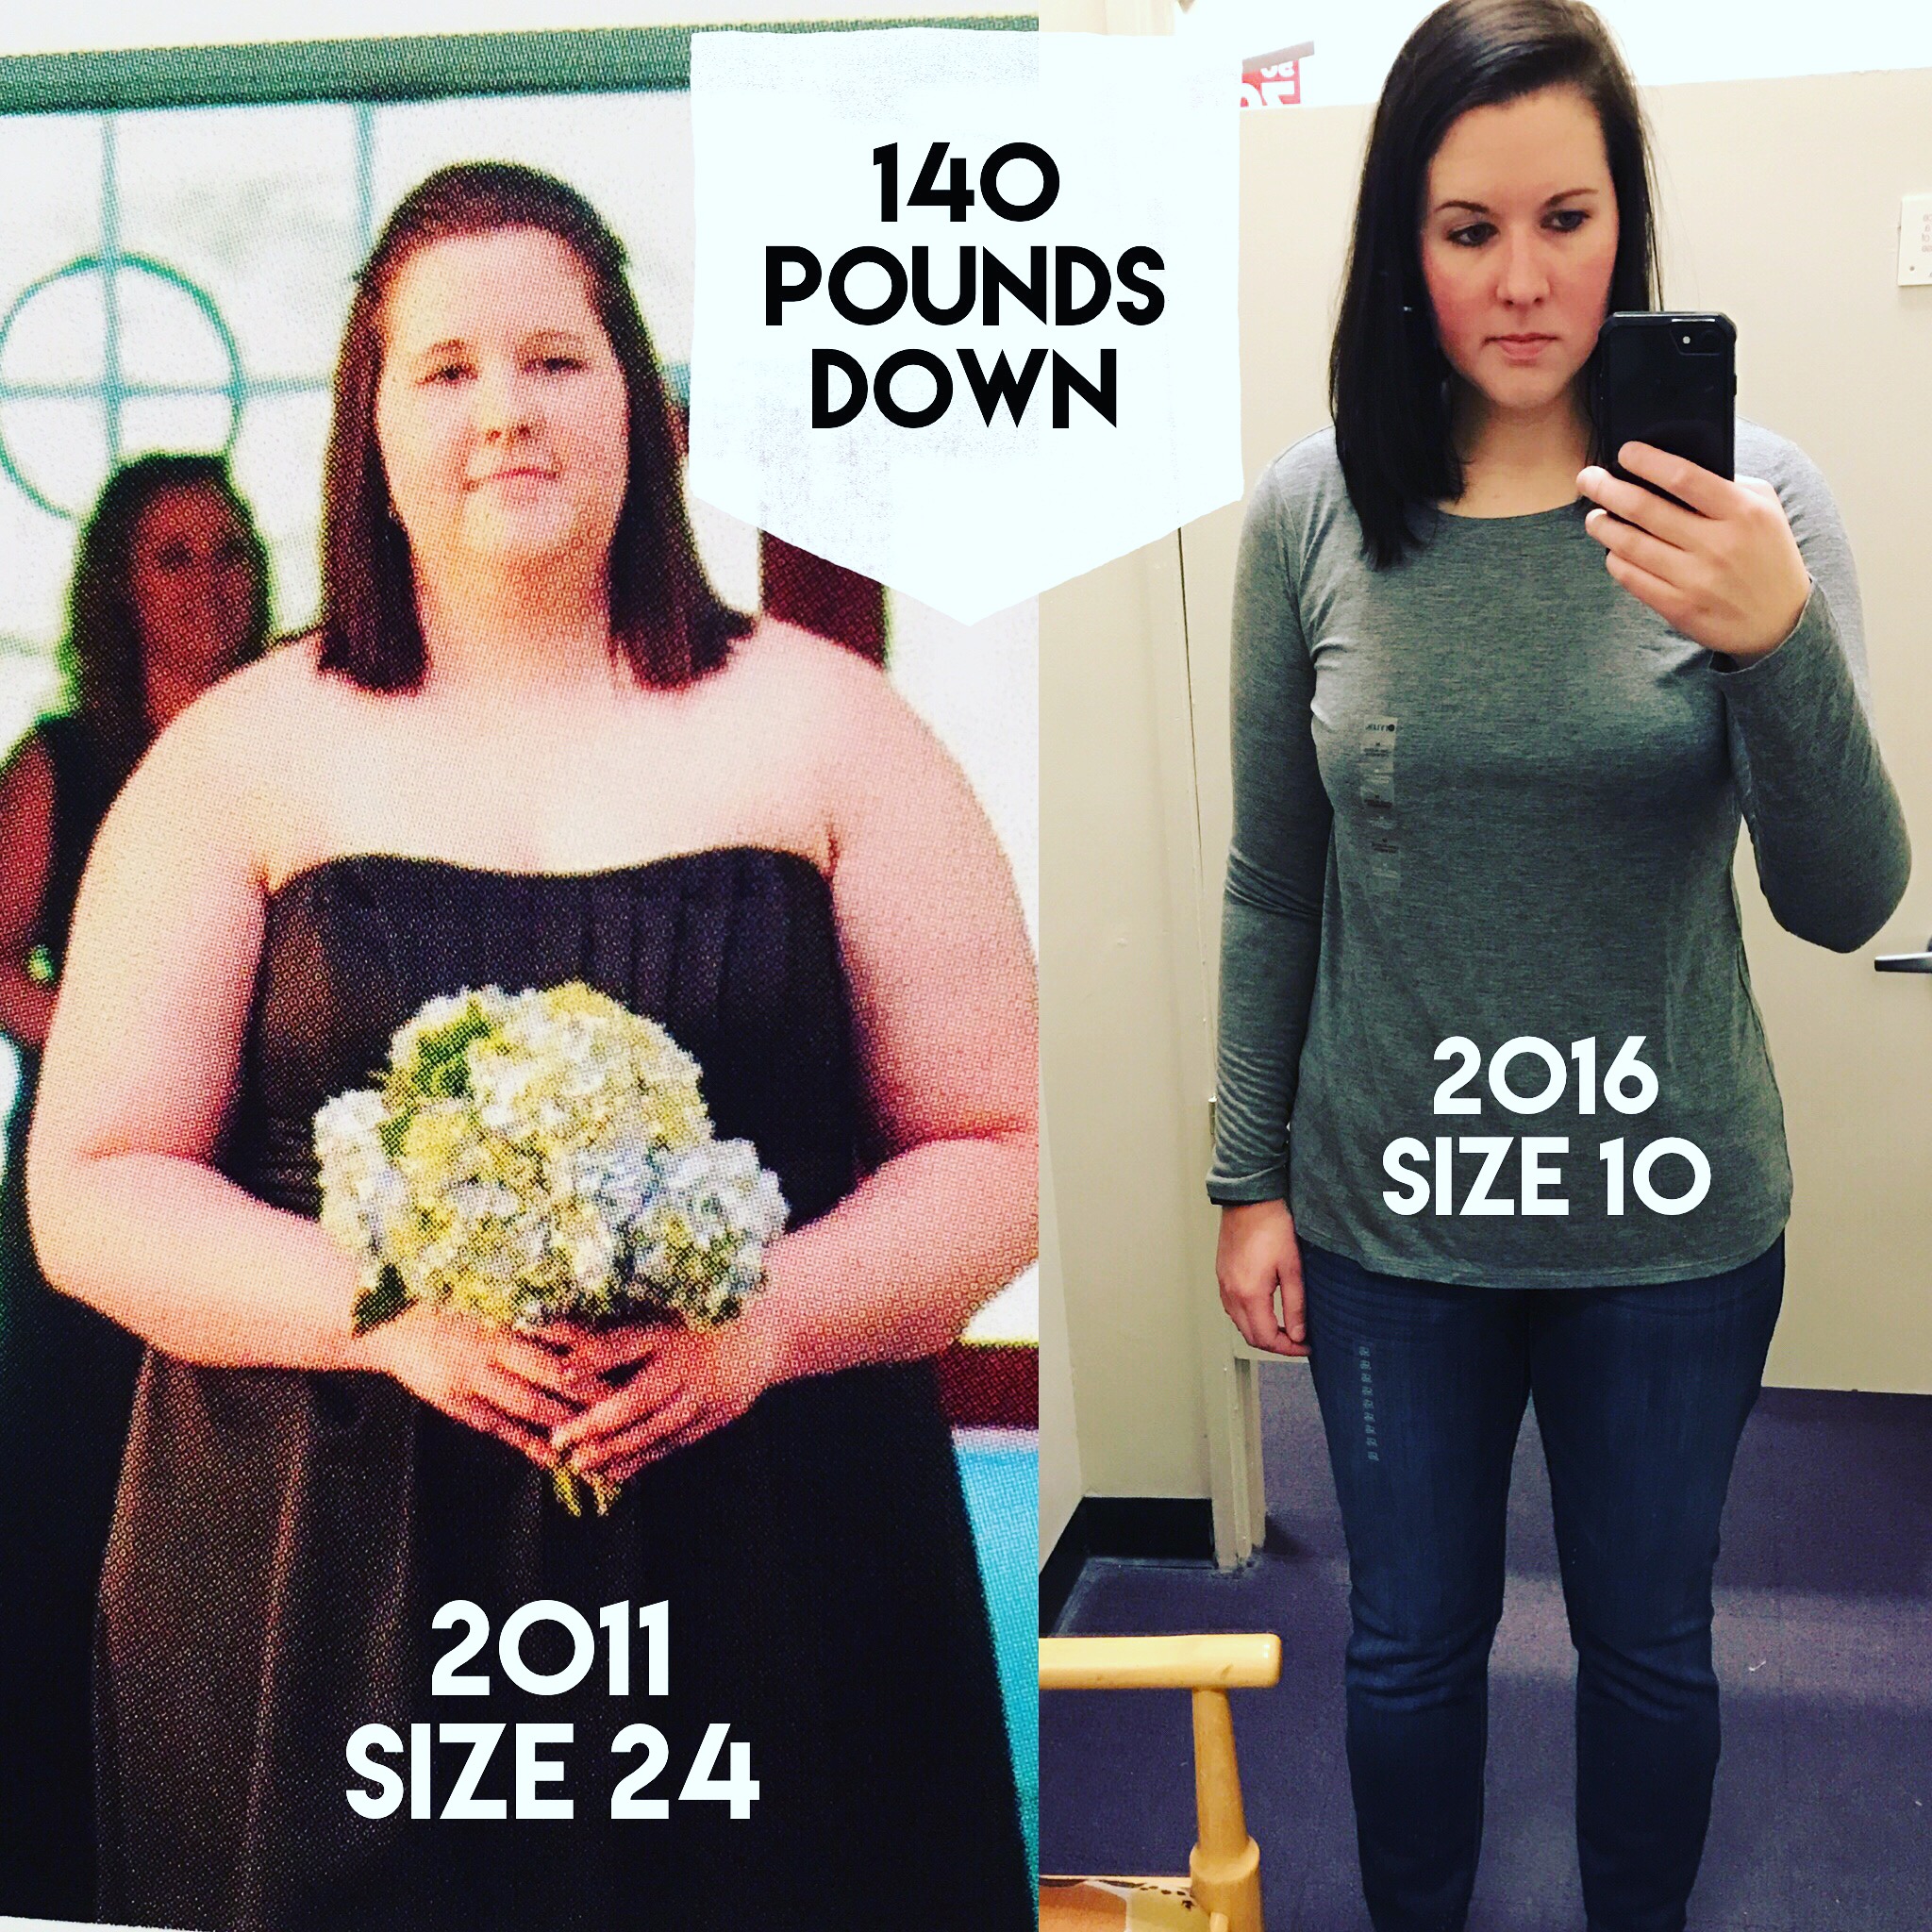 28 Motivating Weight Loss Transformations